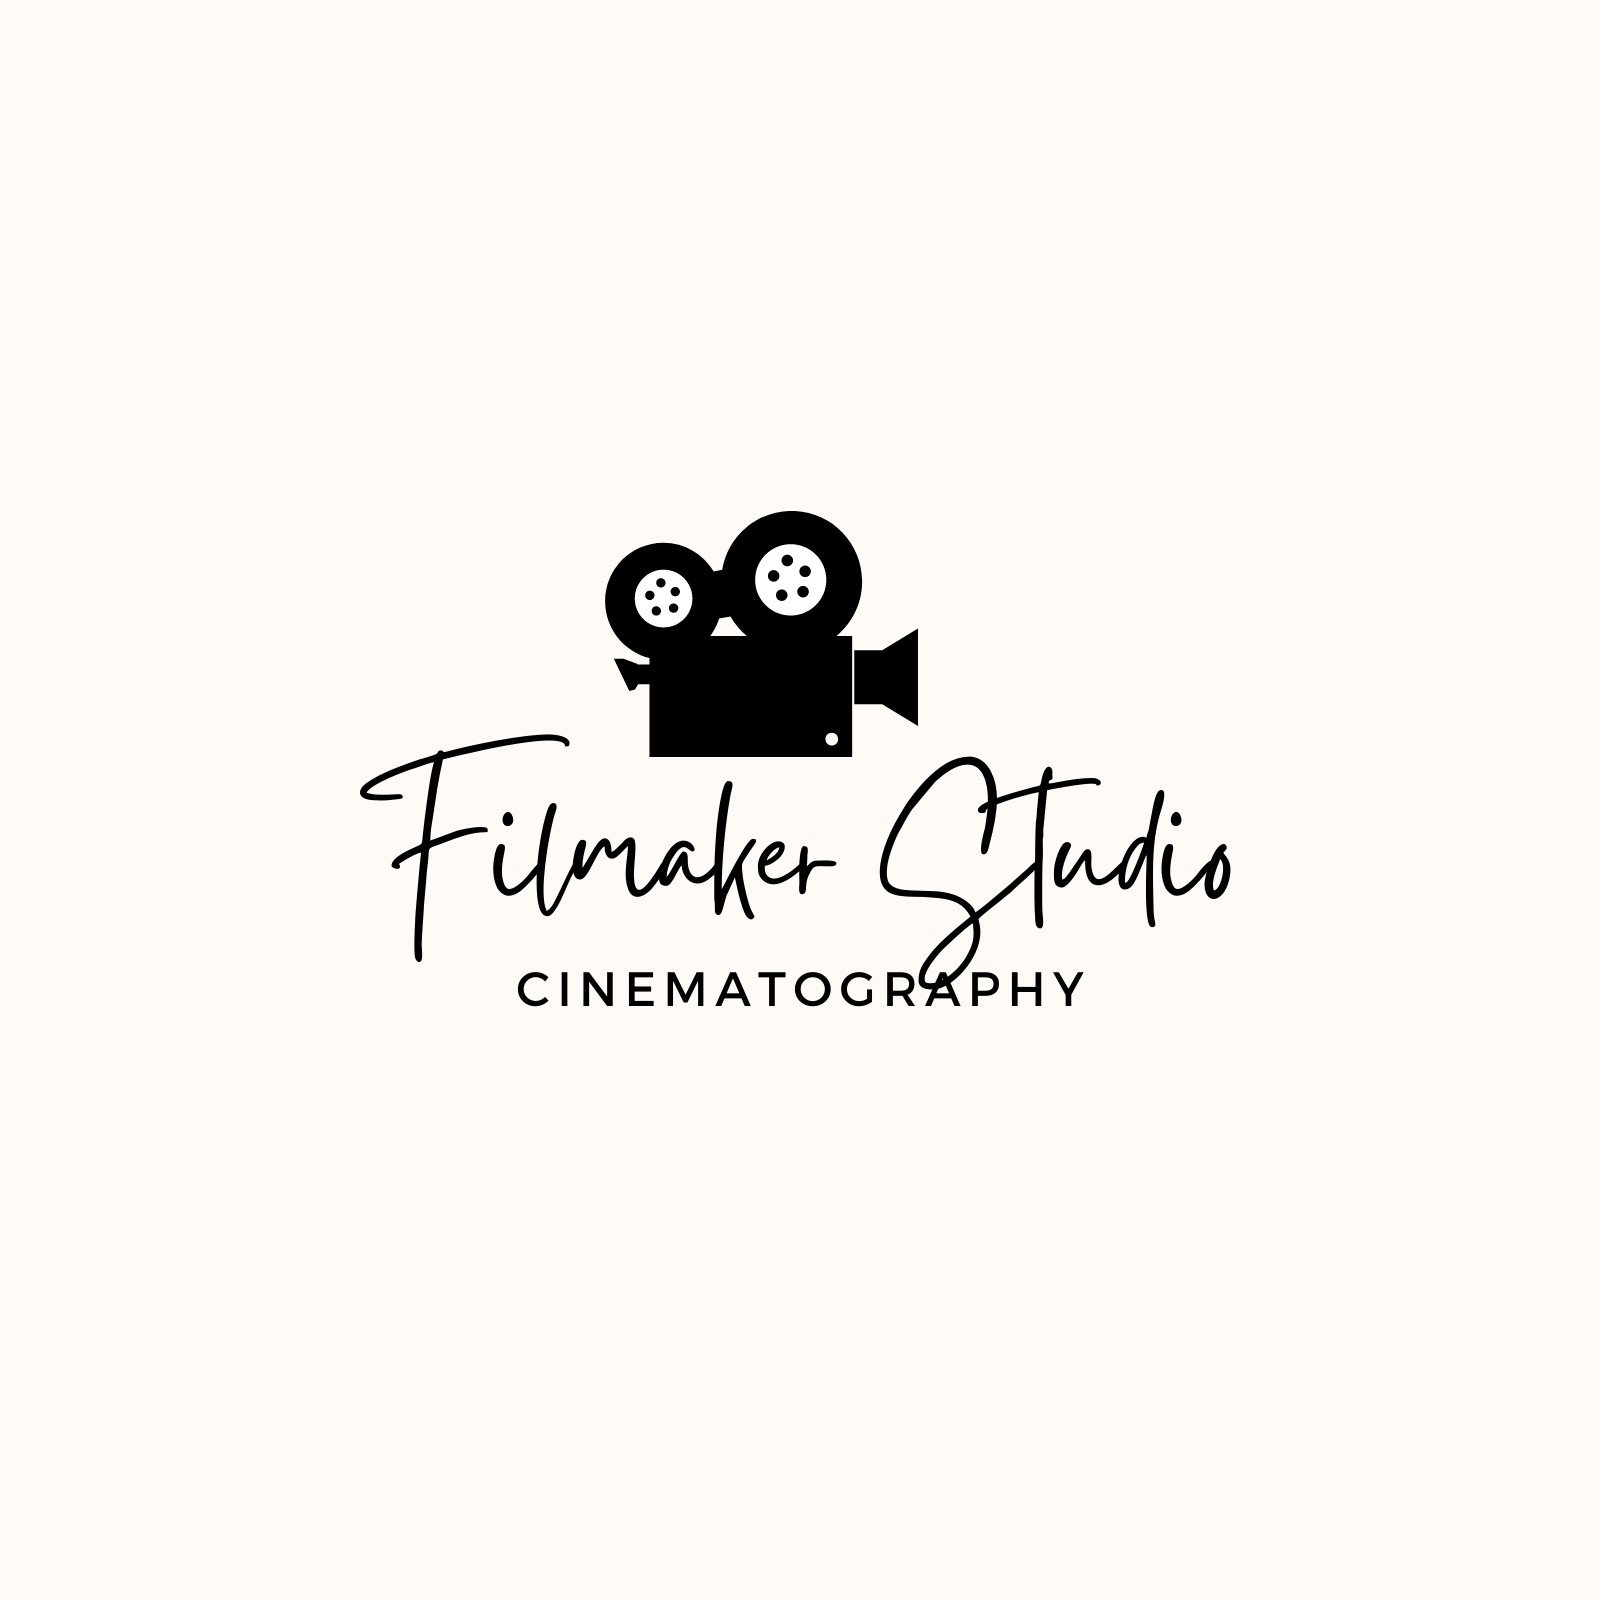 us film studio logos